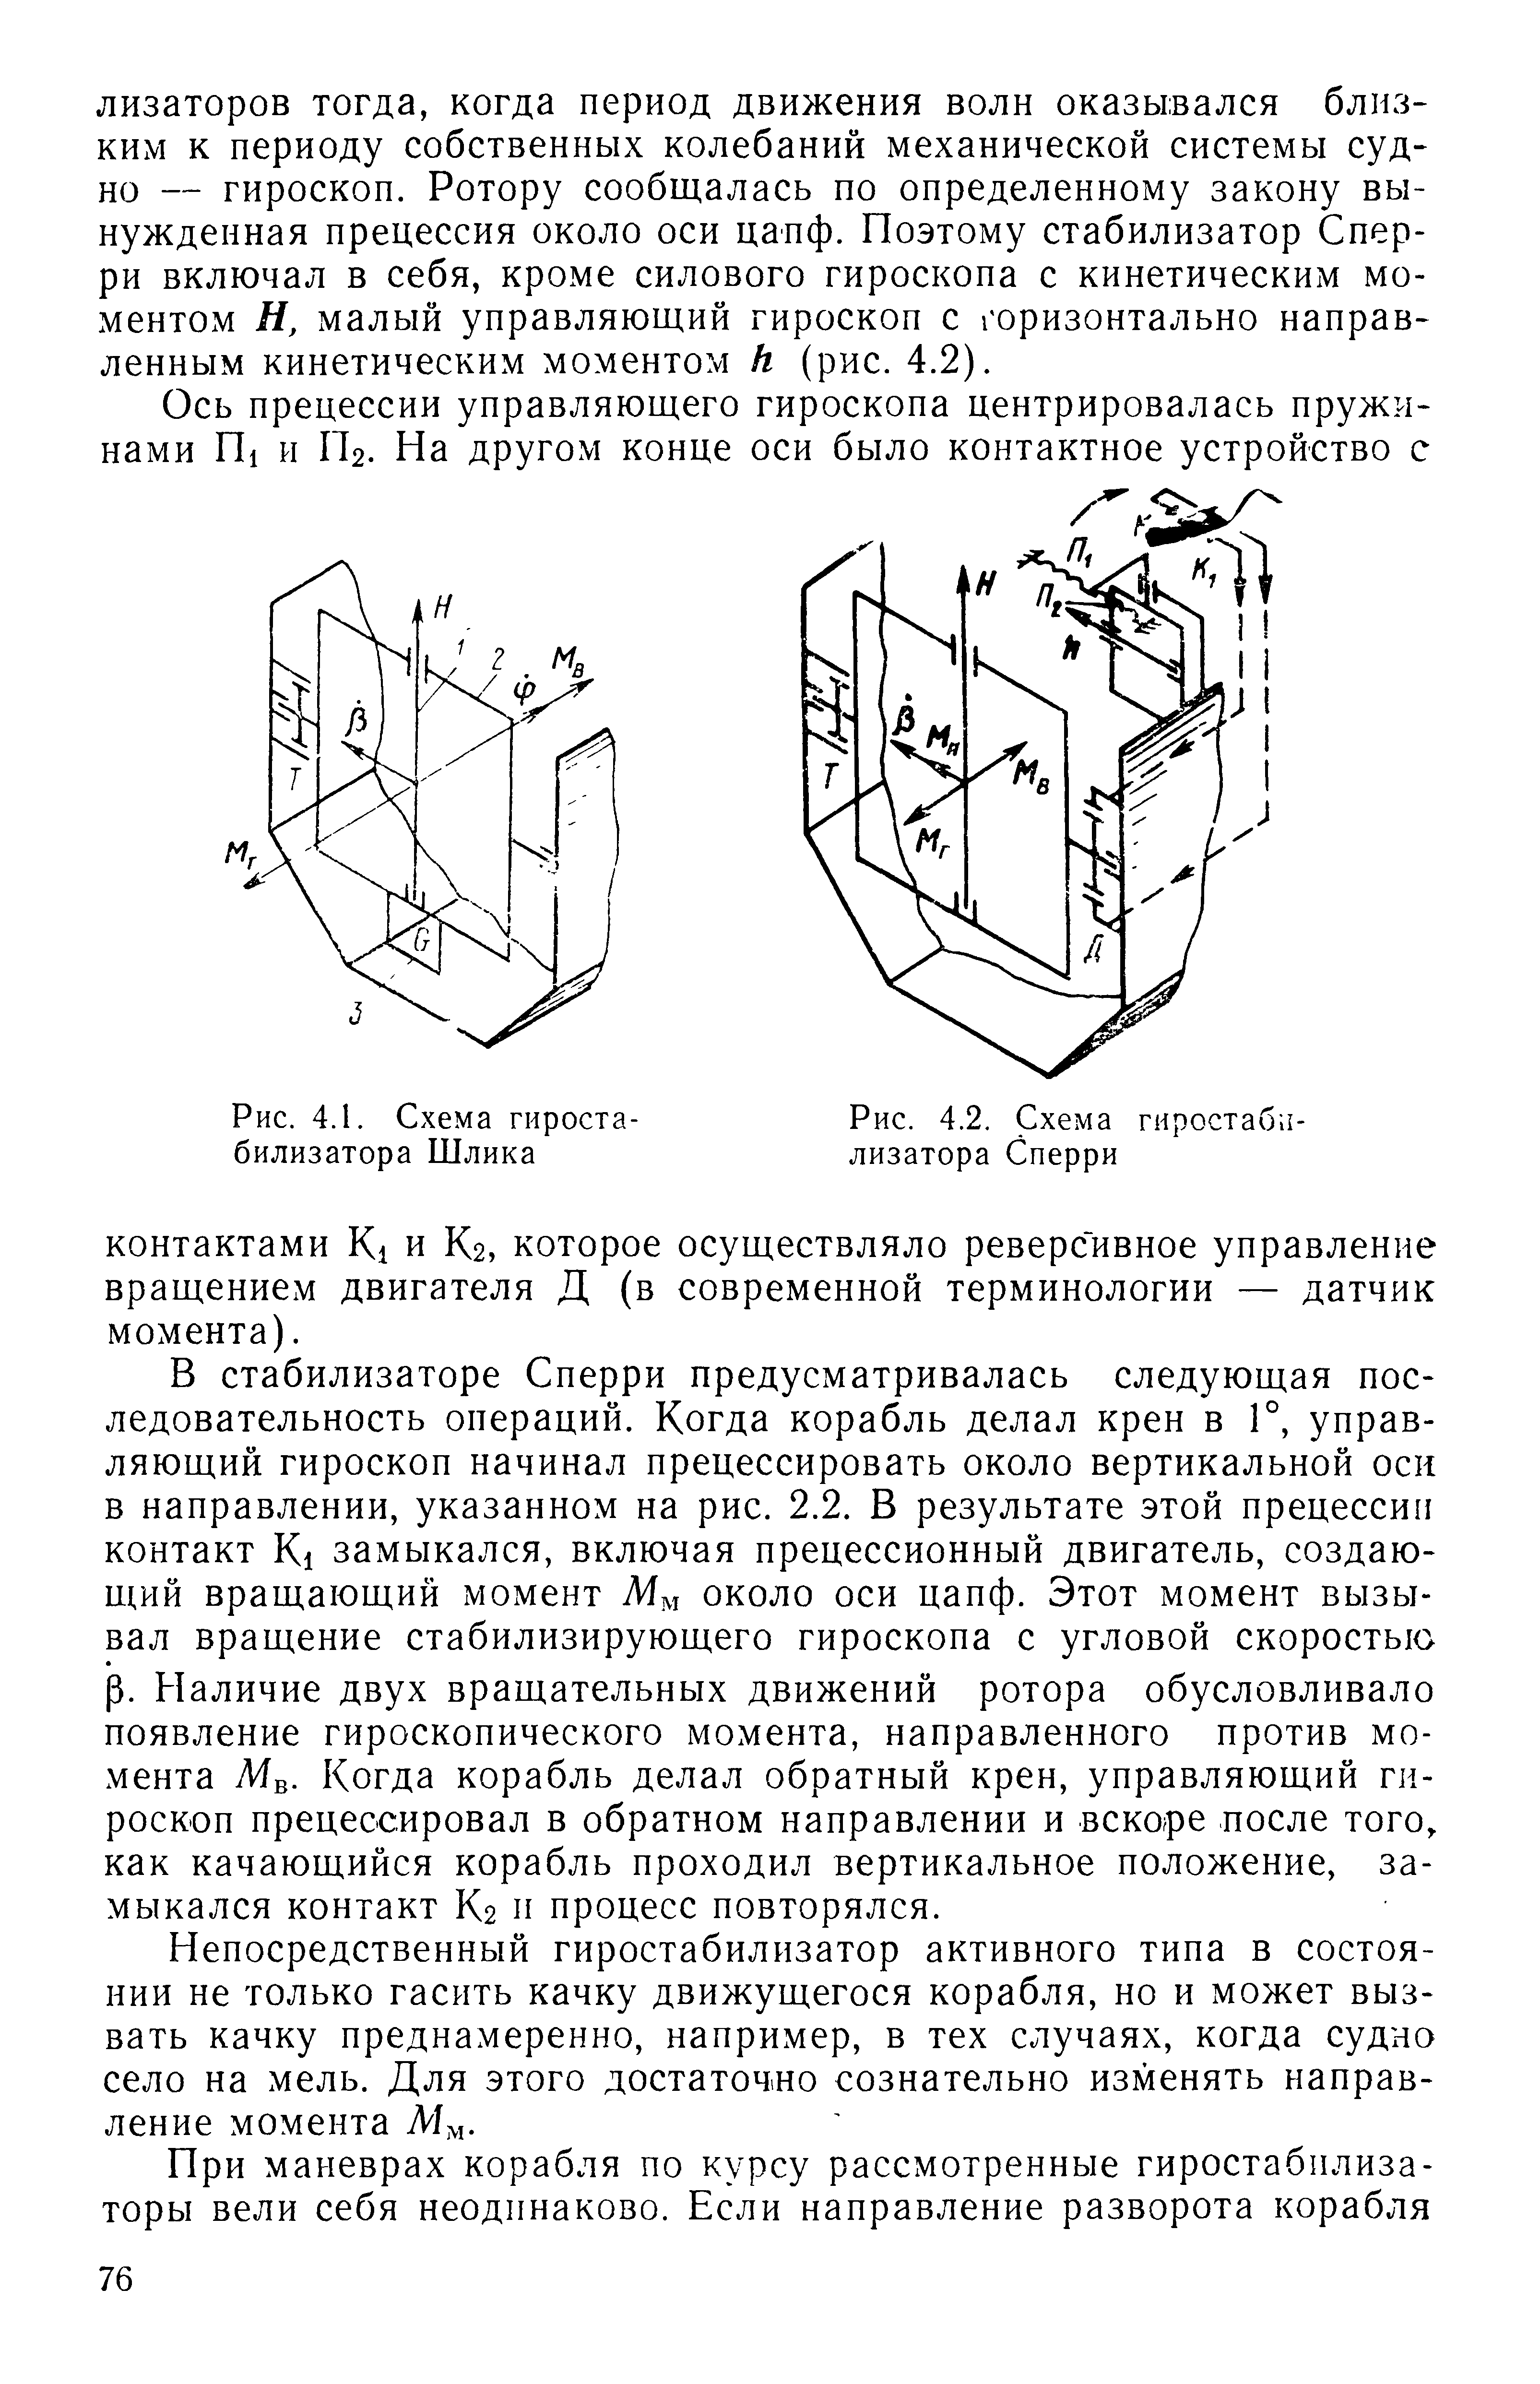 Рис. 4.2, Схема гиростабилизатора Сперри
